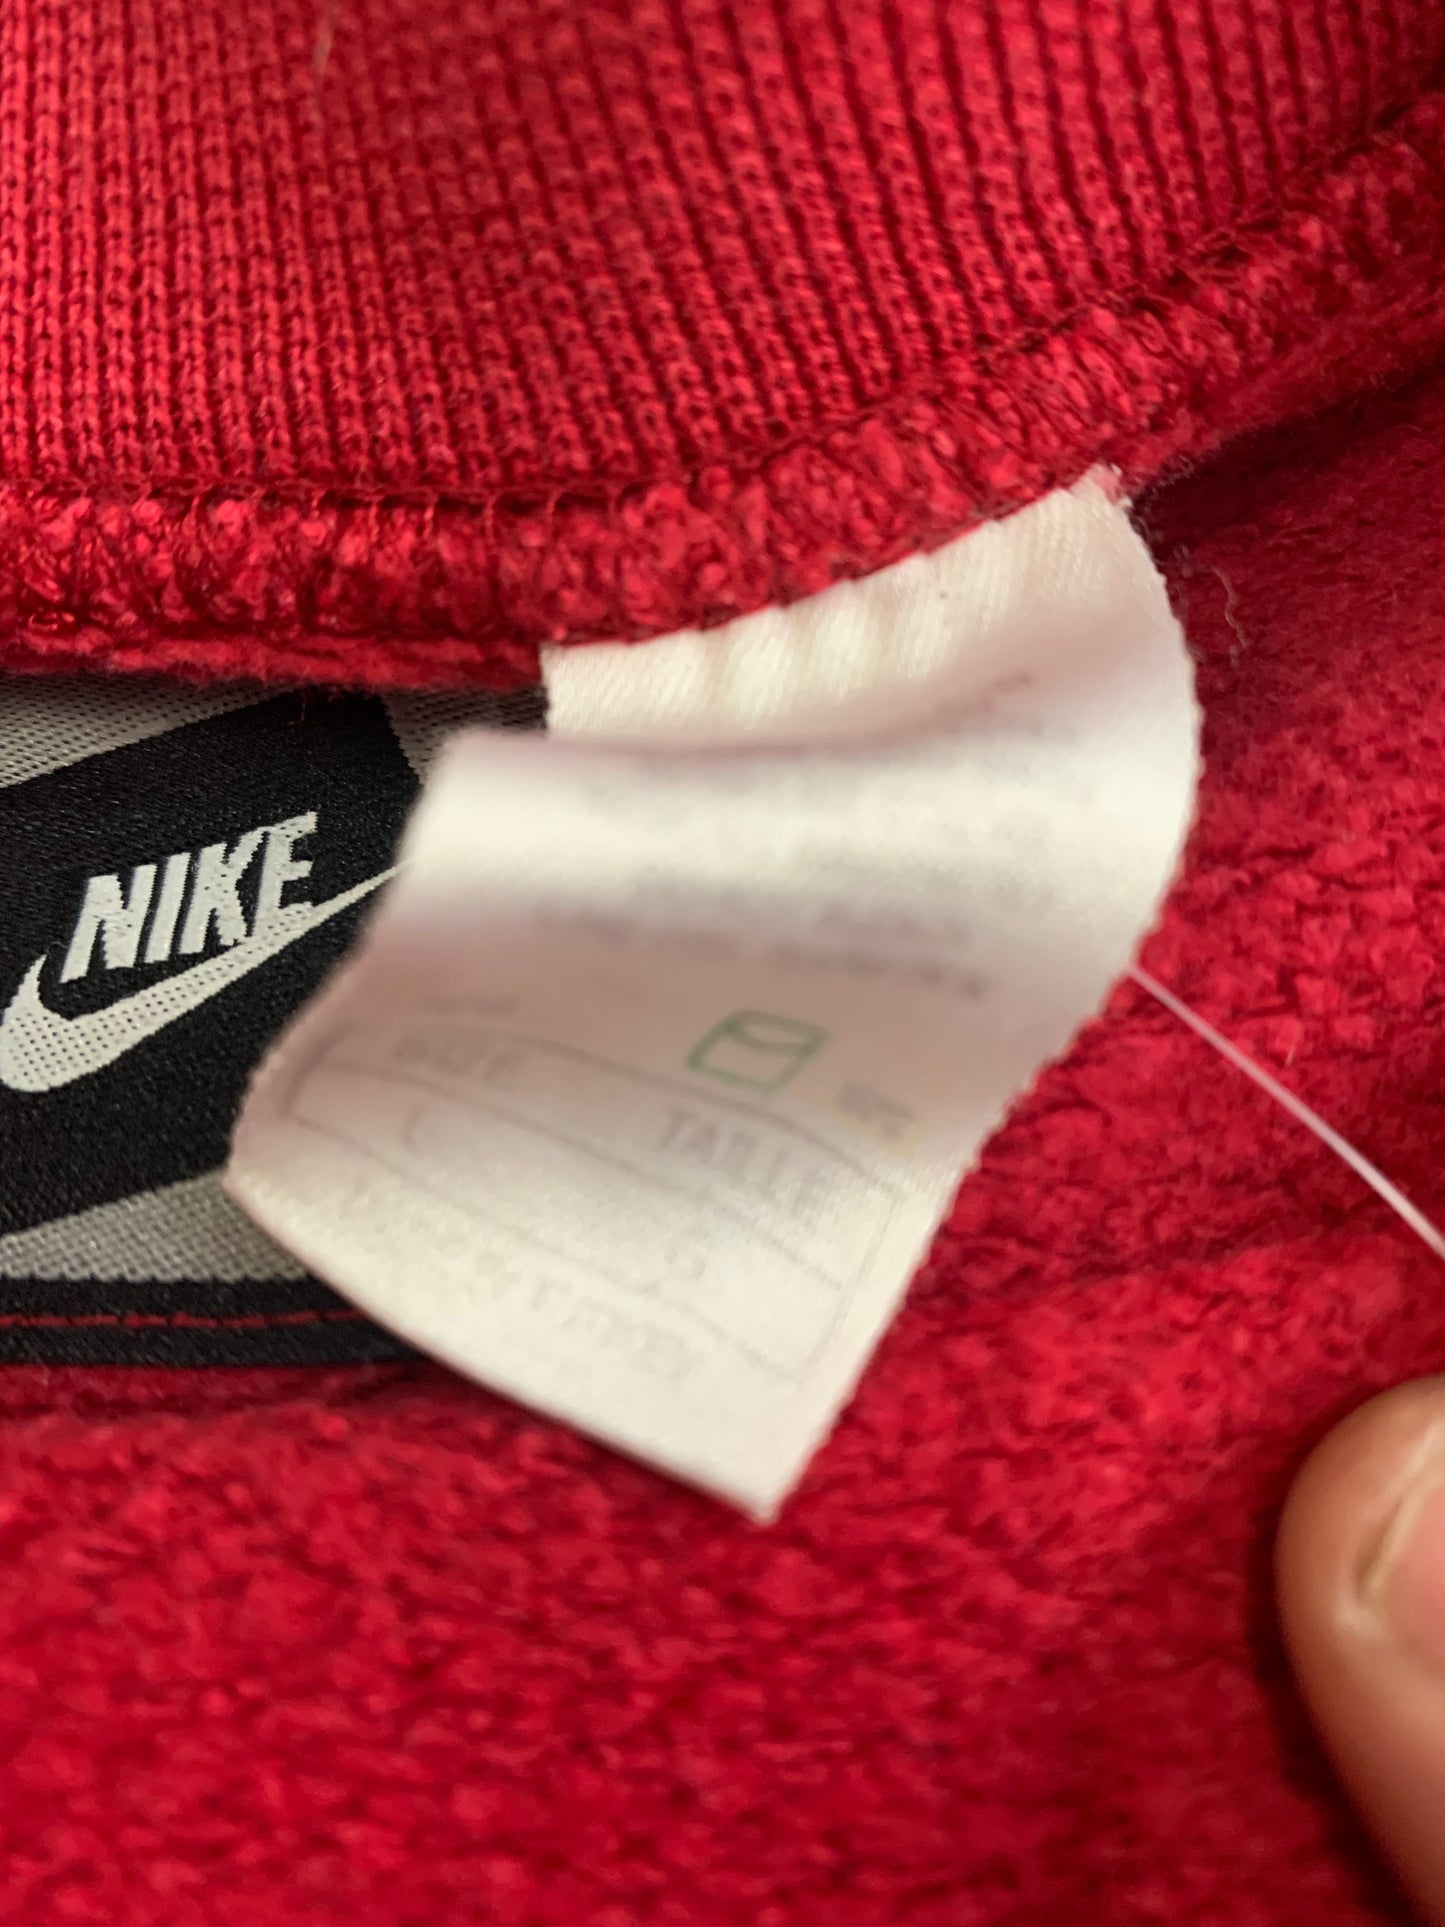 Vintage Nike 90's Sweatshirt - L